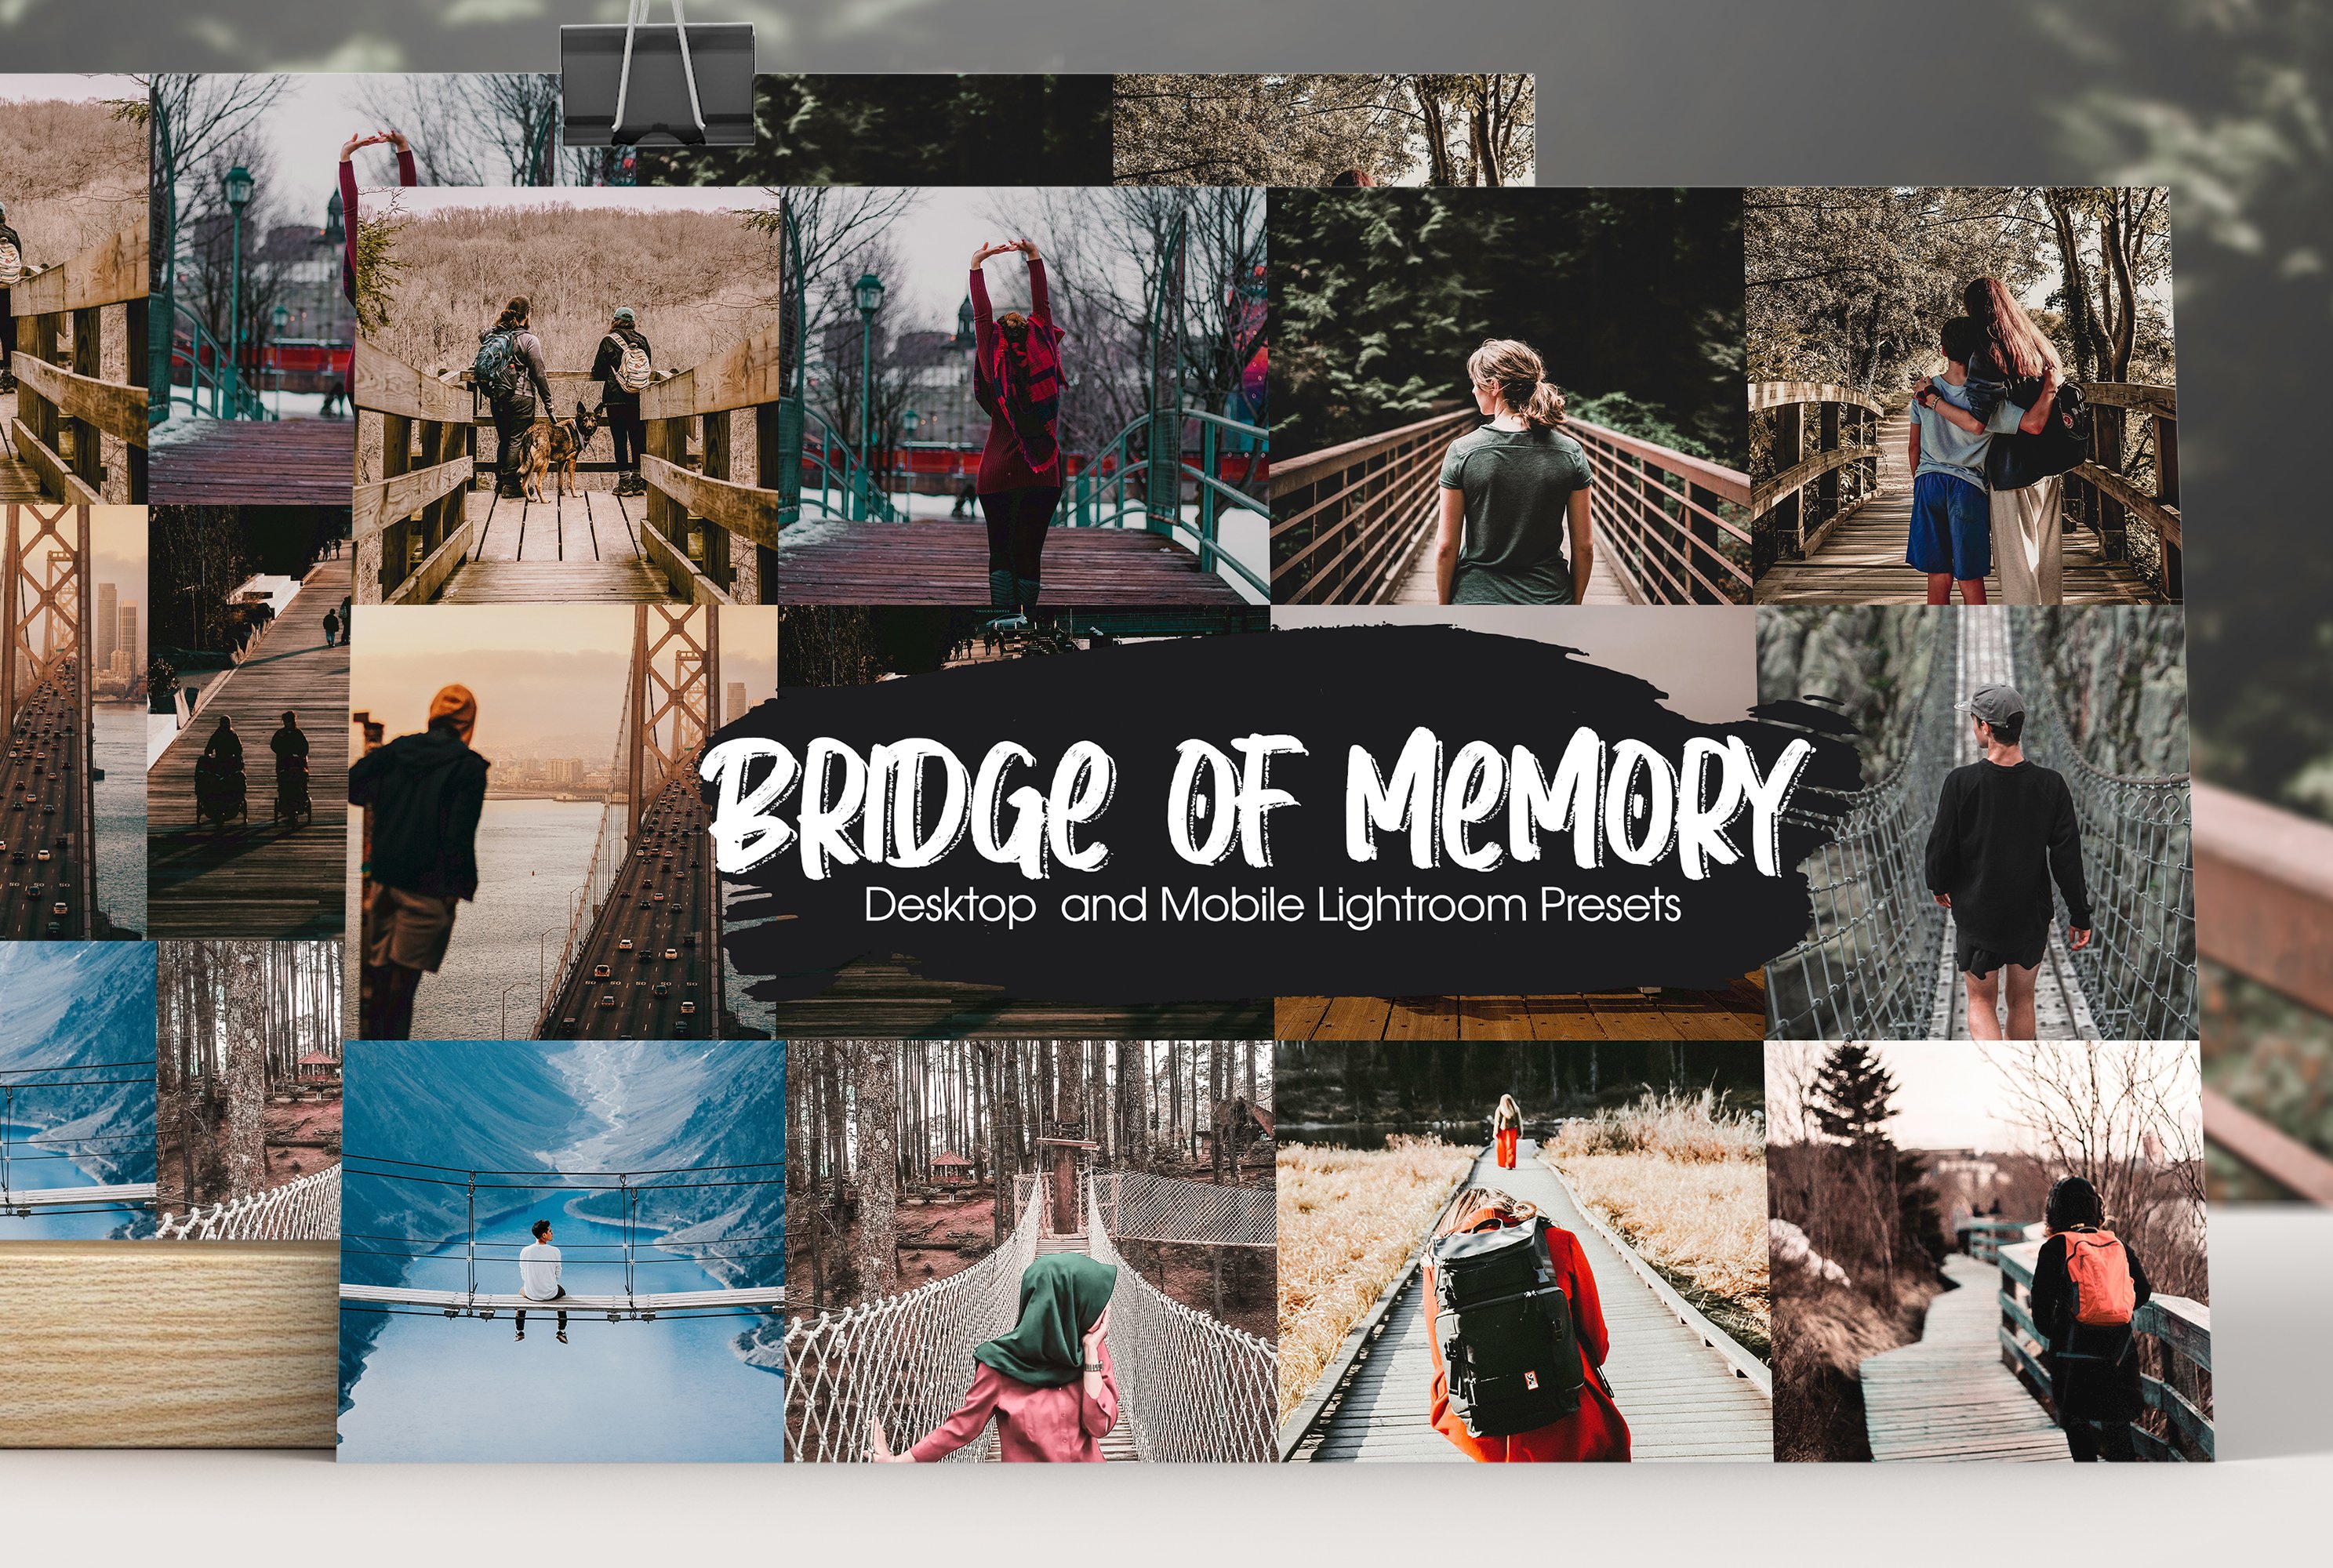 Bridge of Memory Lightroom Presetscover image.